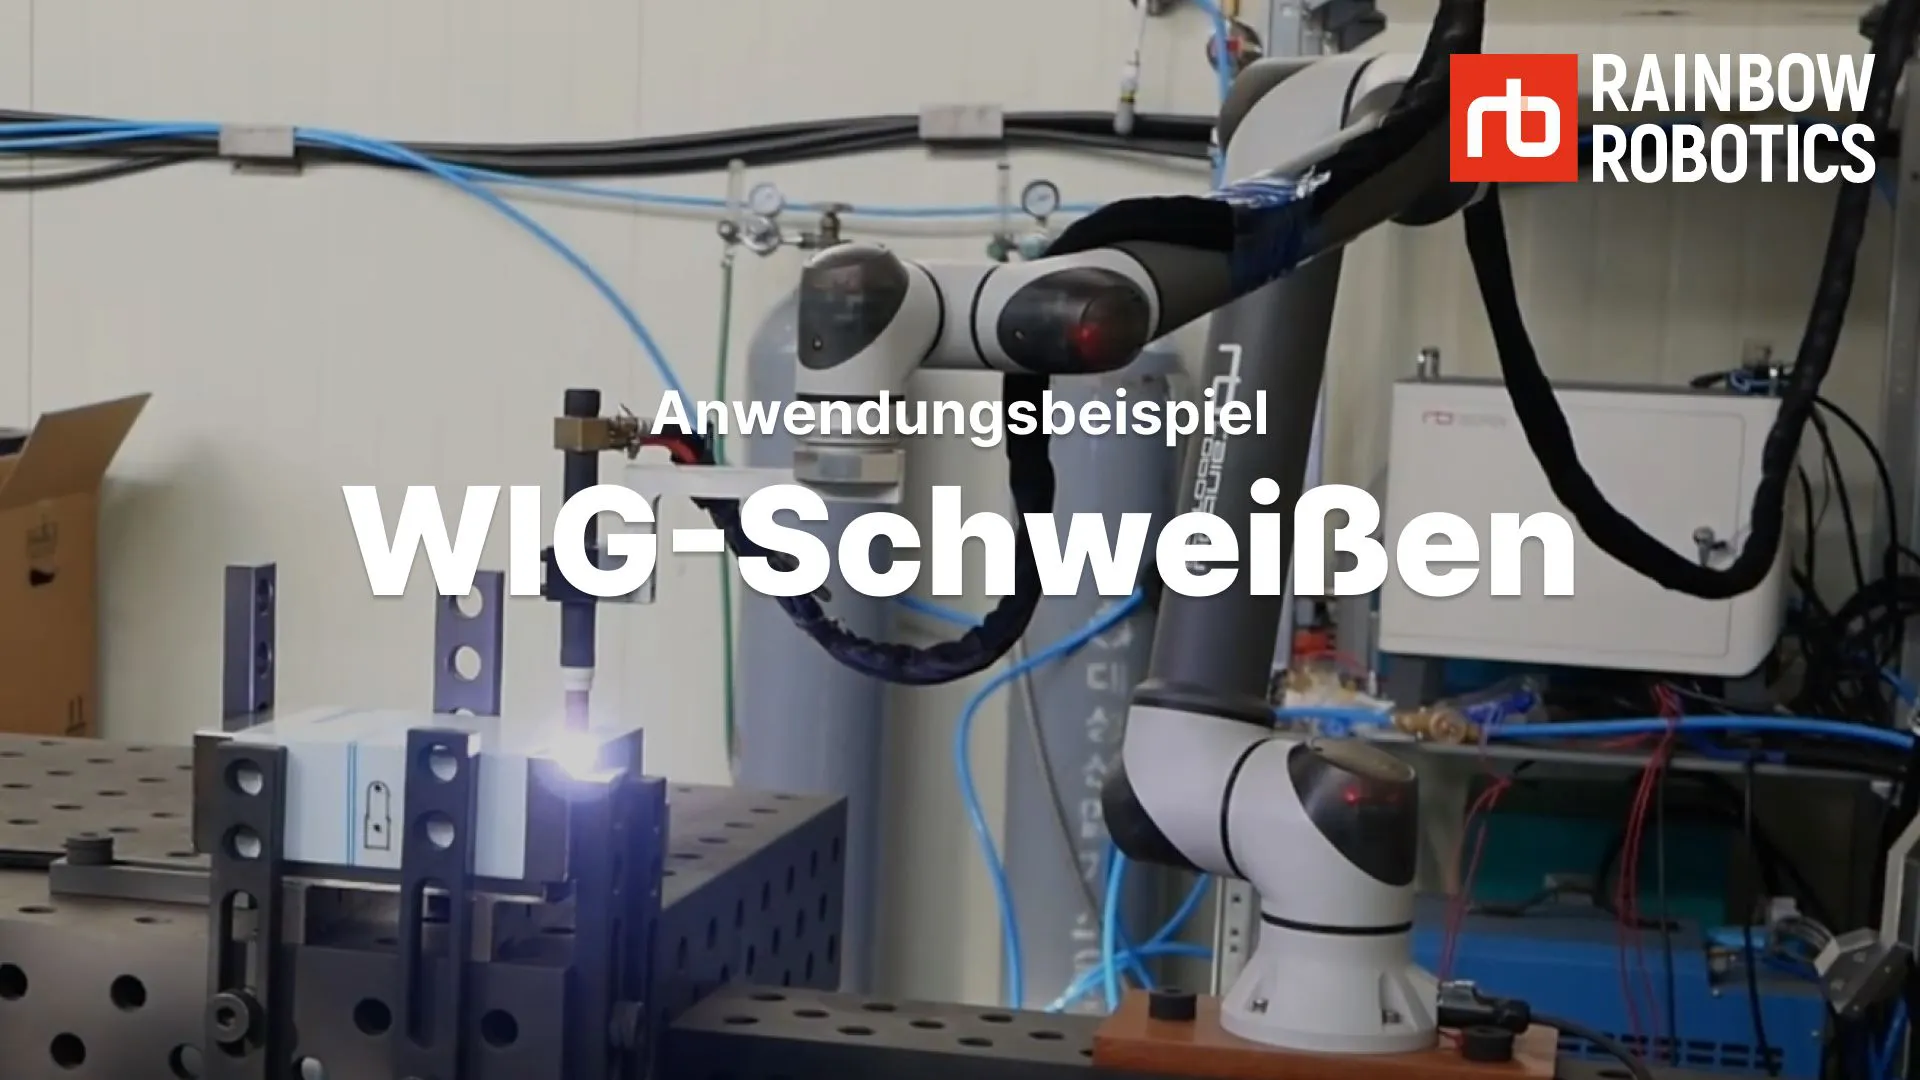 Thumbnail of WIG-Schweißen example application of Rainbow Robotics Cobots